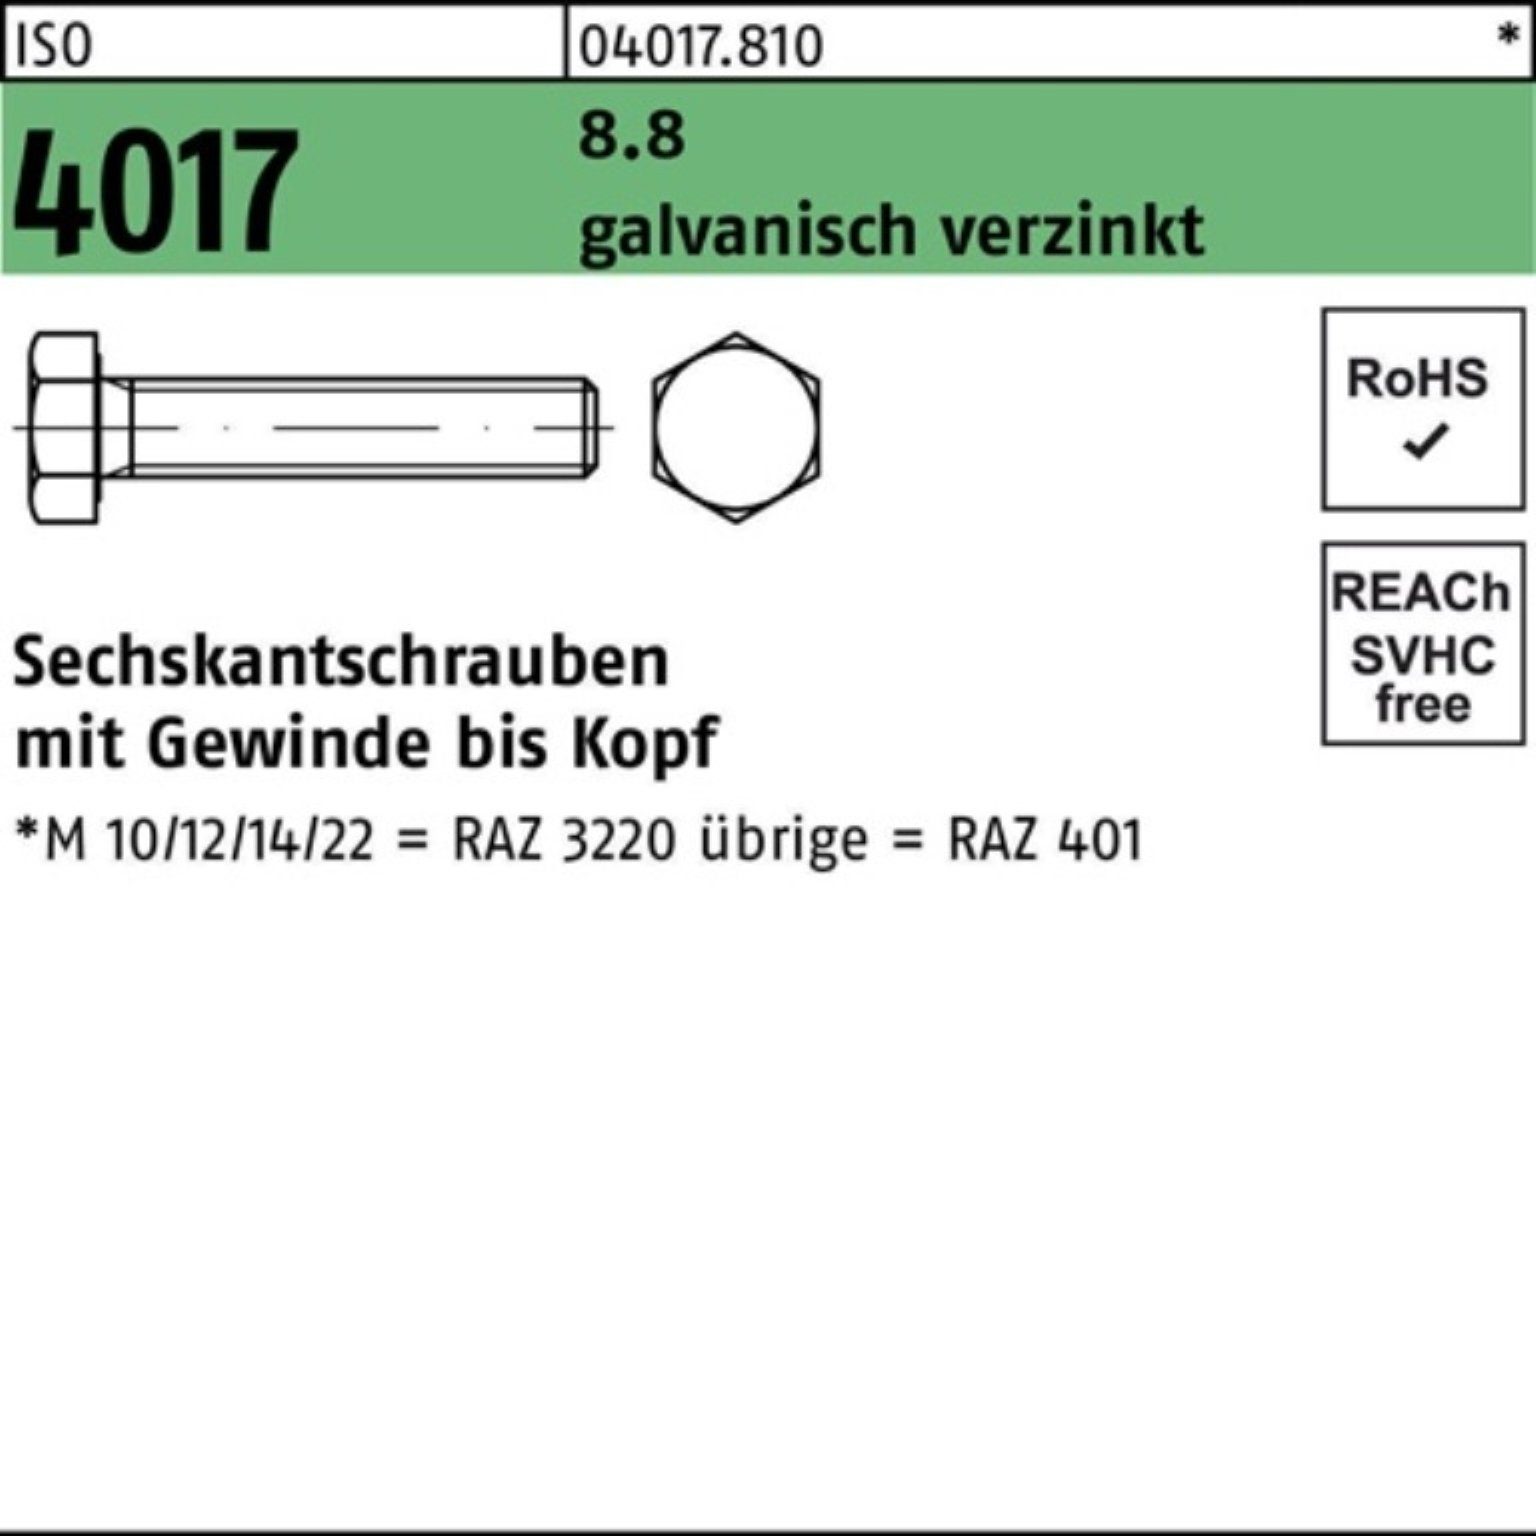 Bufab Sechskantschraube 4017 galv.verz. Pack St VG 8.8 M42x 150 100er Sechskantschraube ISO 1